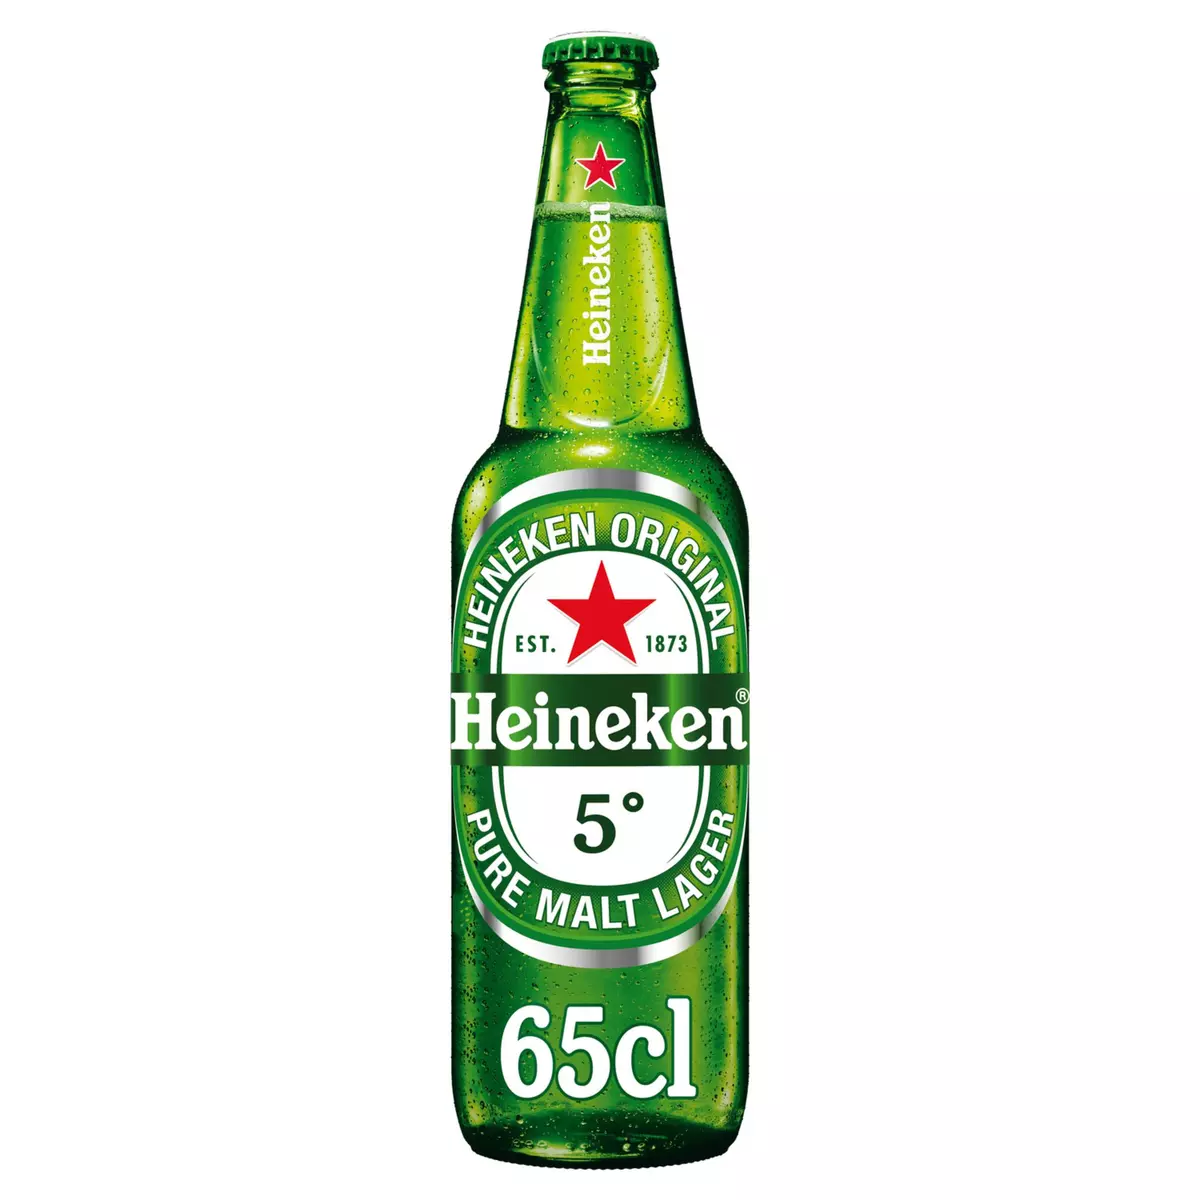 HEINEKEN Bière blonde 5% bouteille 65cl